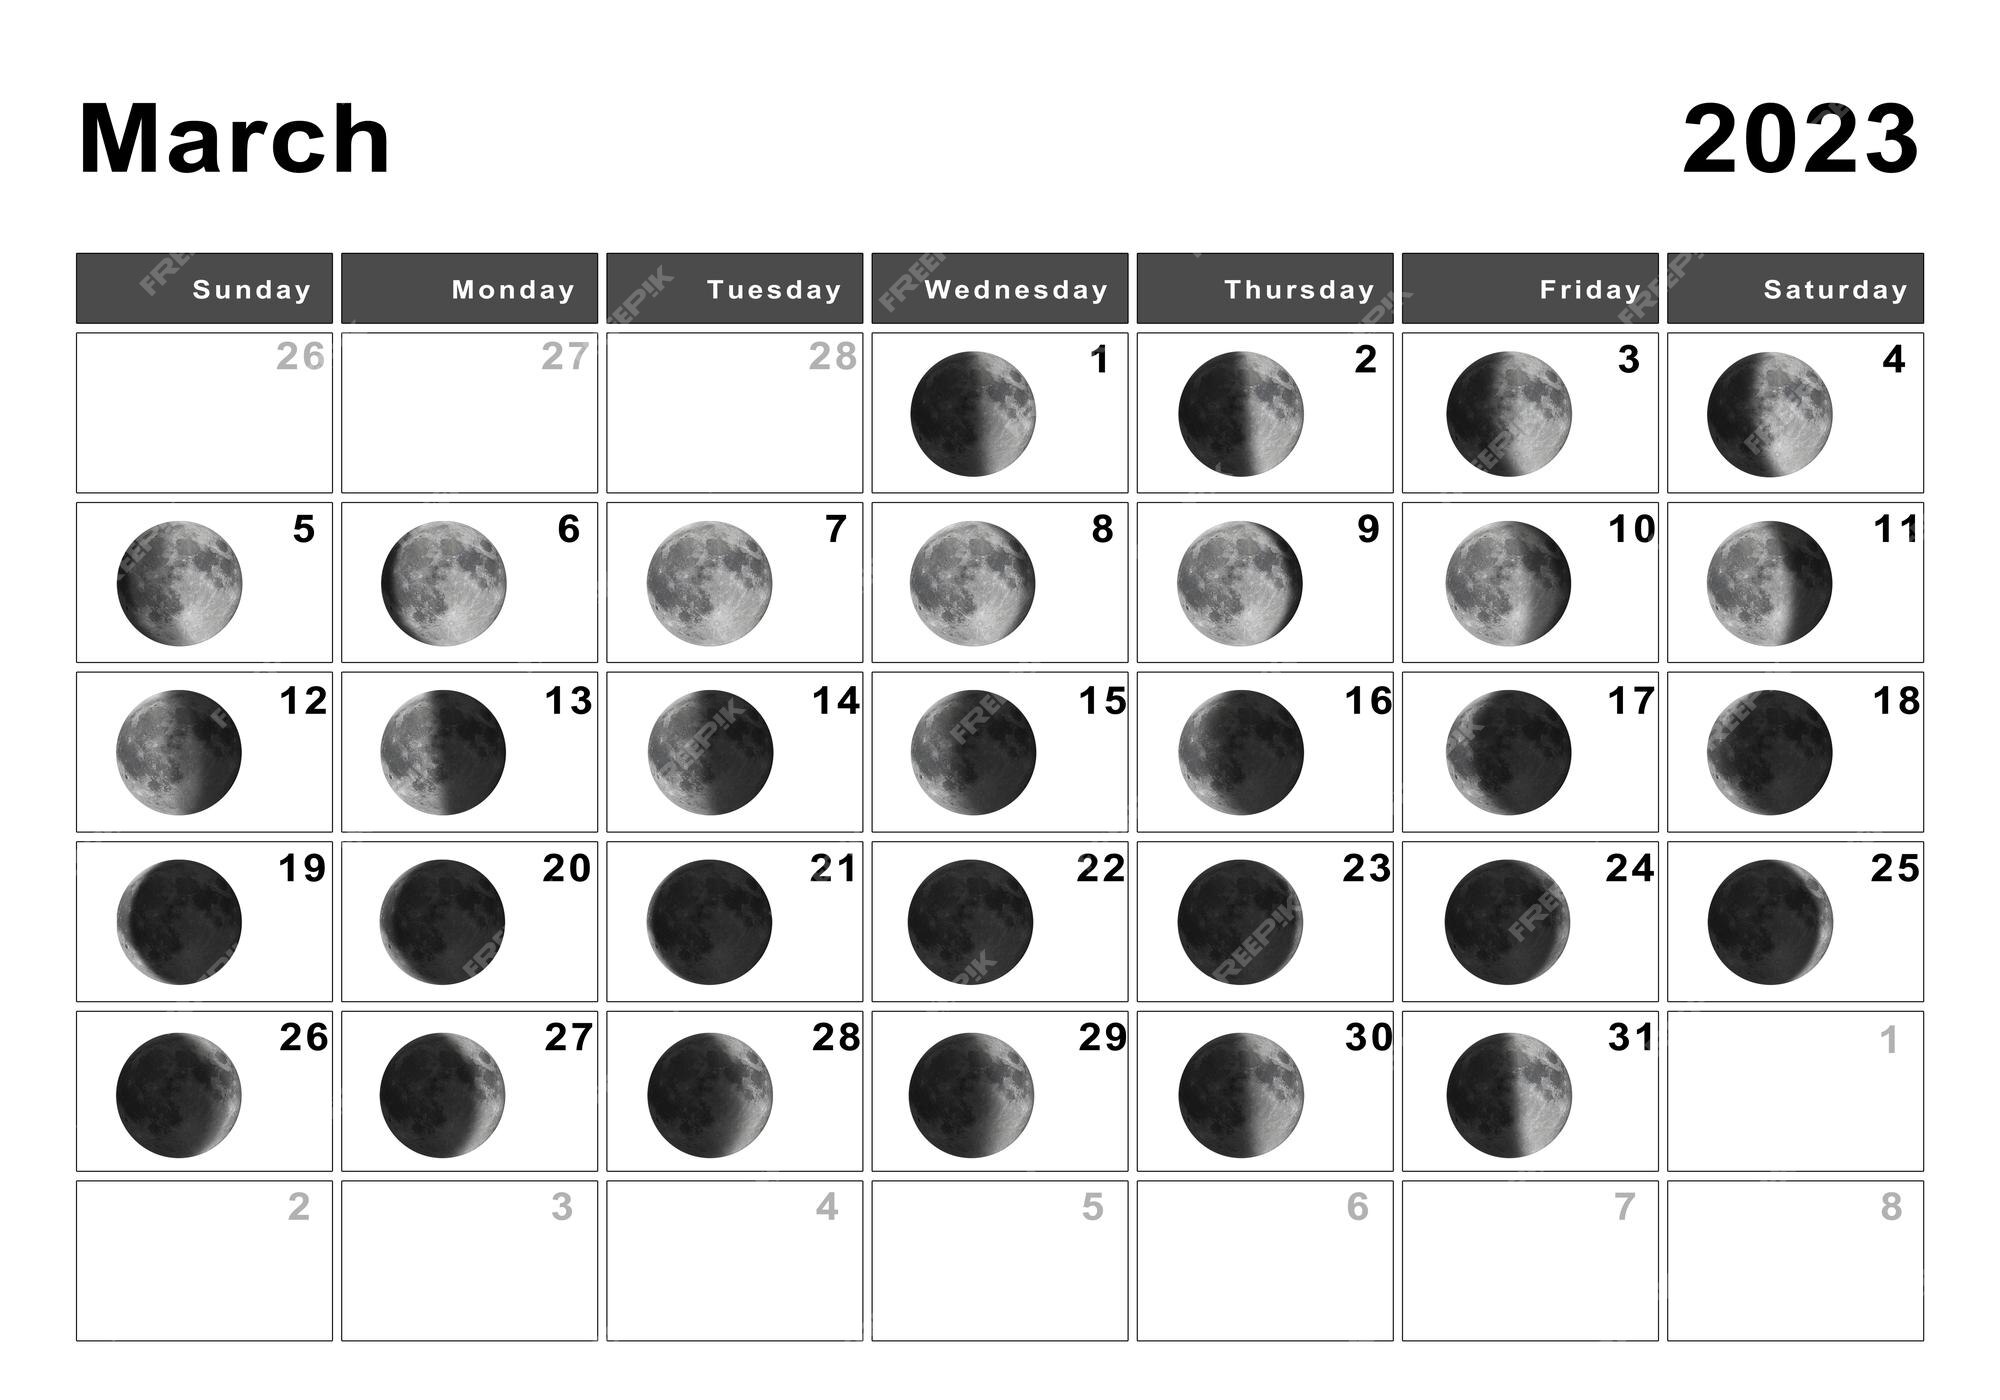 Fase Lunar Del 2023 Premium Photo | March 2023 lunar calendar, moon cycles, moon phases